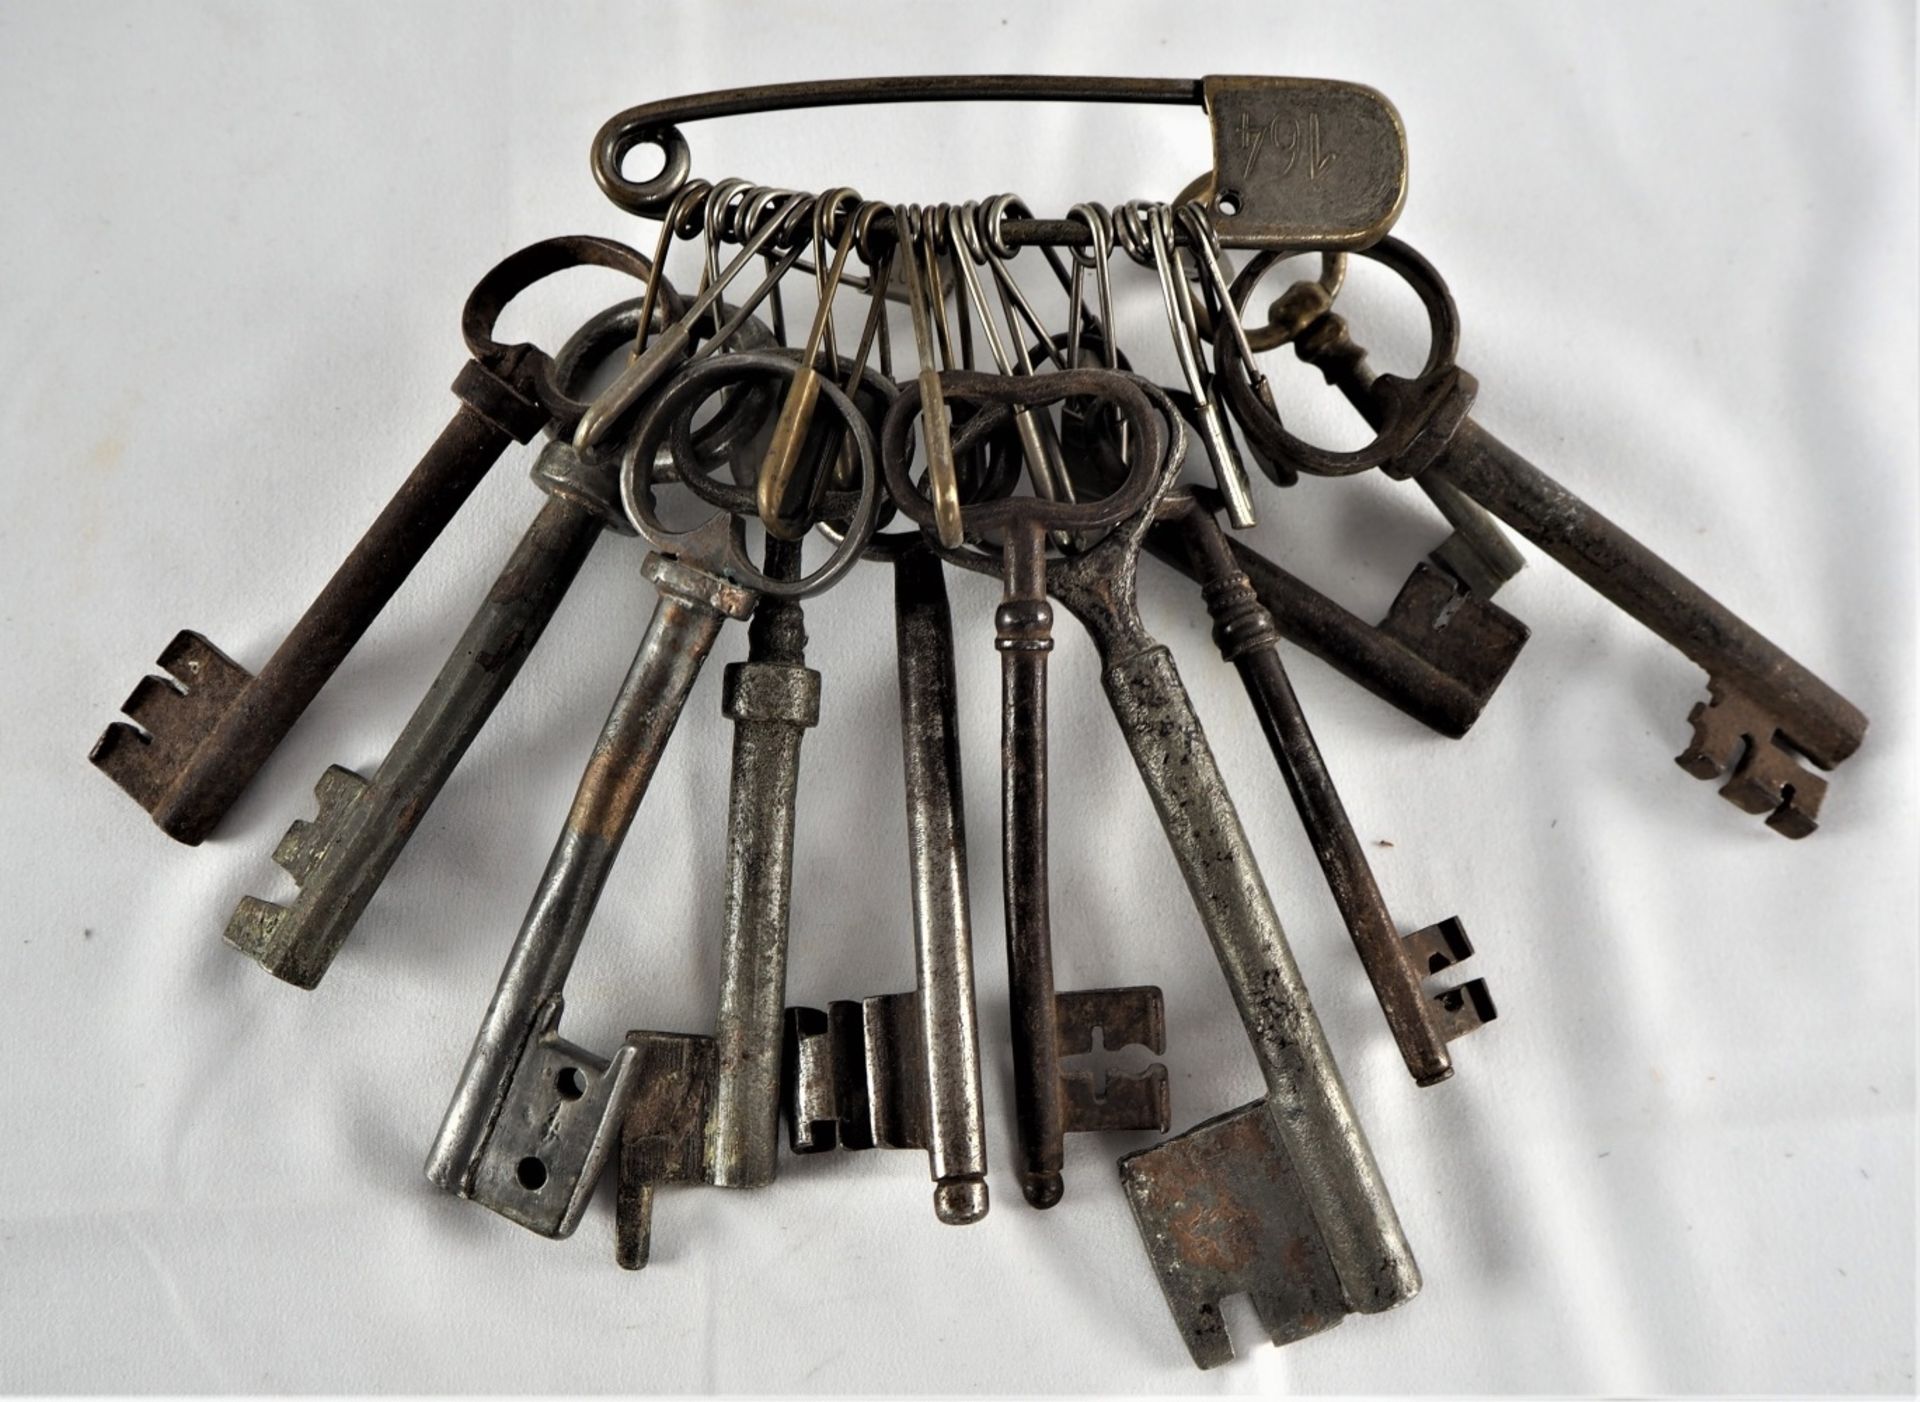 Sammlung großer Schlüssel, 11 Stückaus Metall, zum Teil geschmiedet, verschiedene Formen